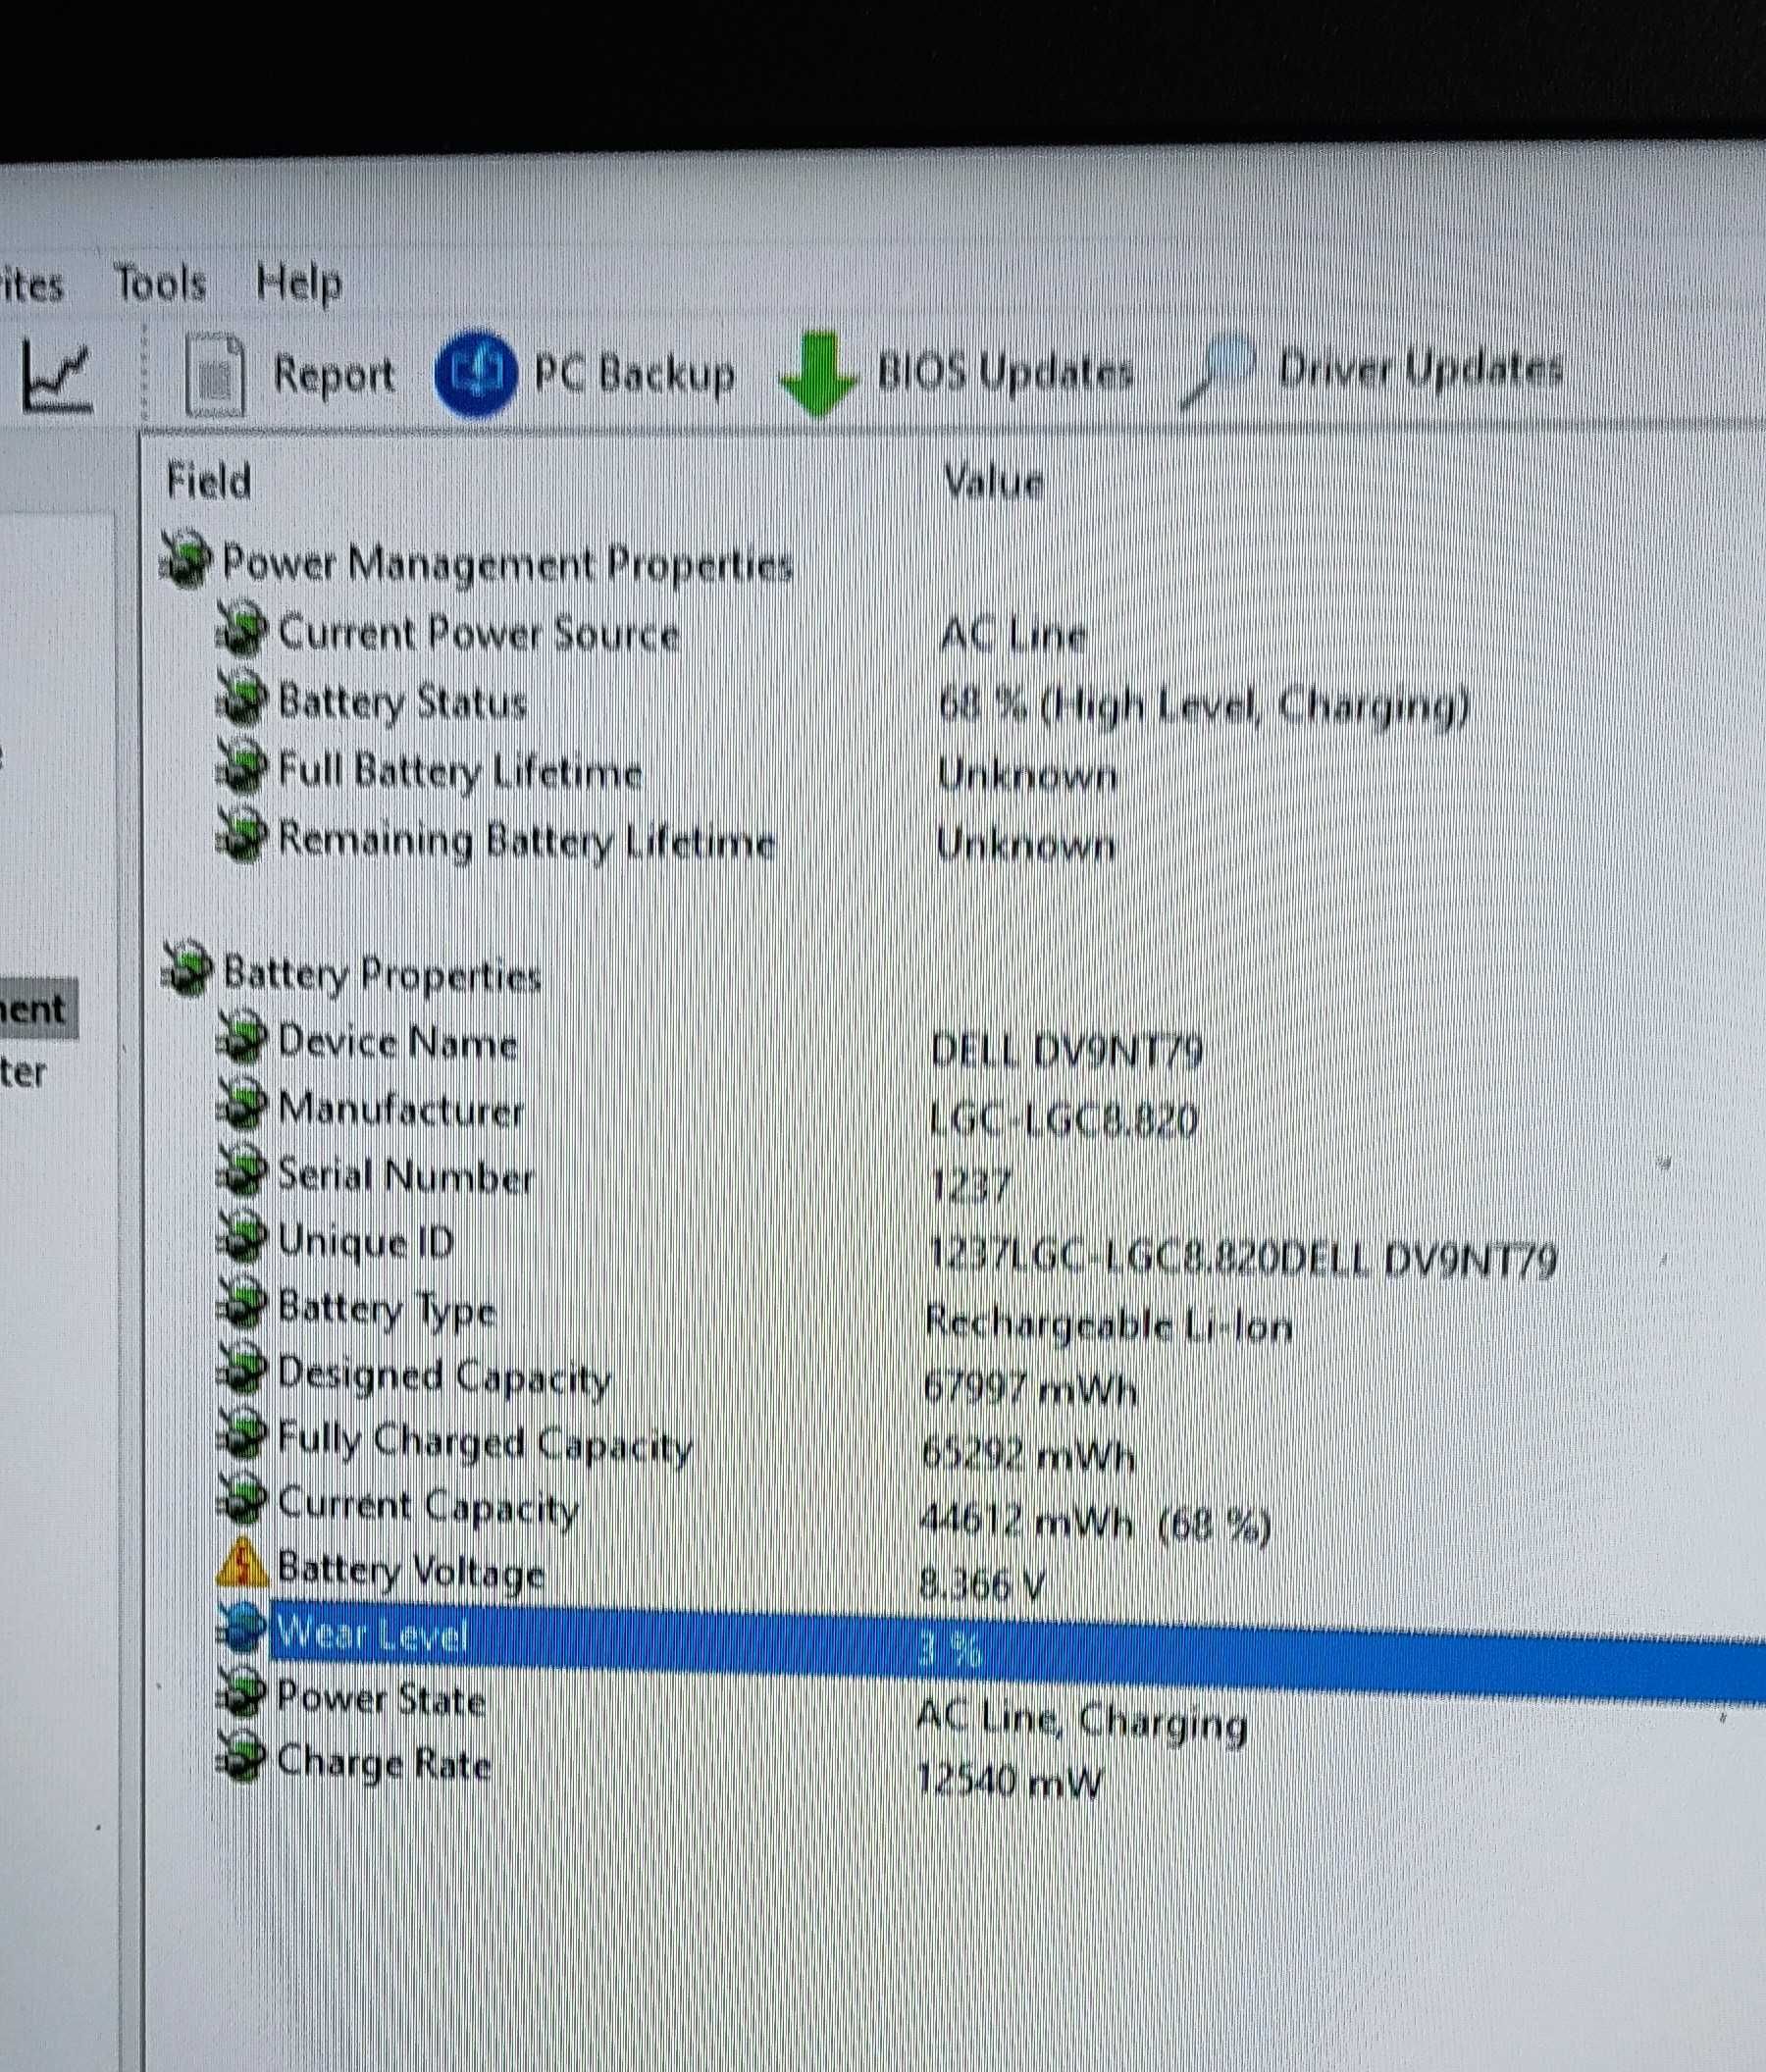 лаптоп Dell Latitude 5580,i5-7440HQ,12GB RAM,512GB Nvme